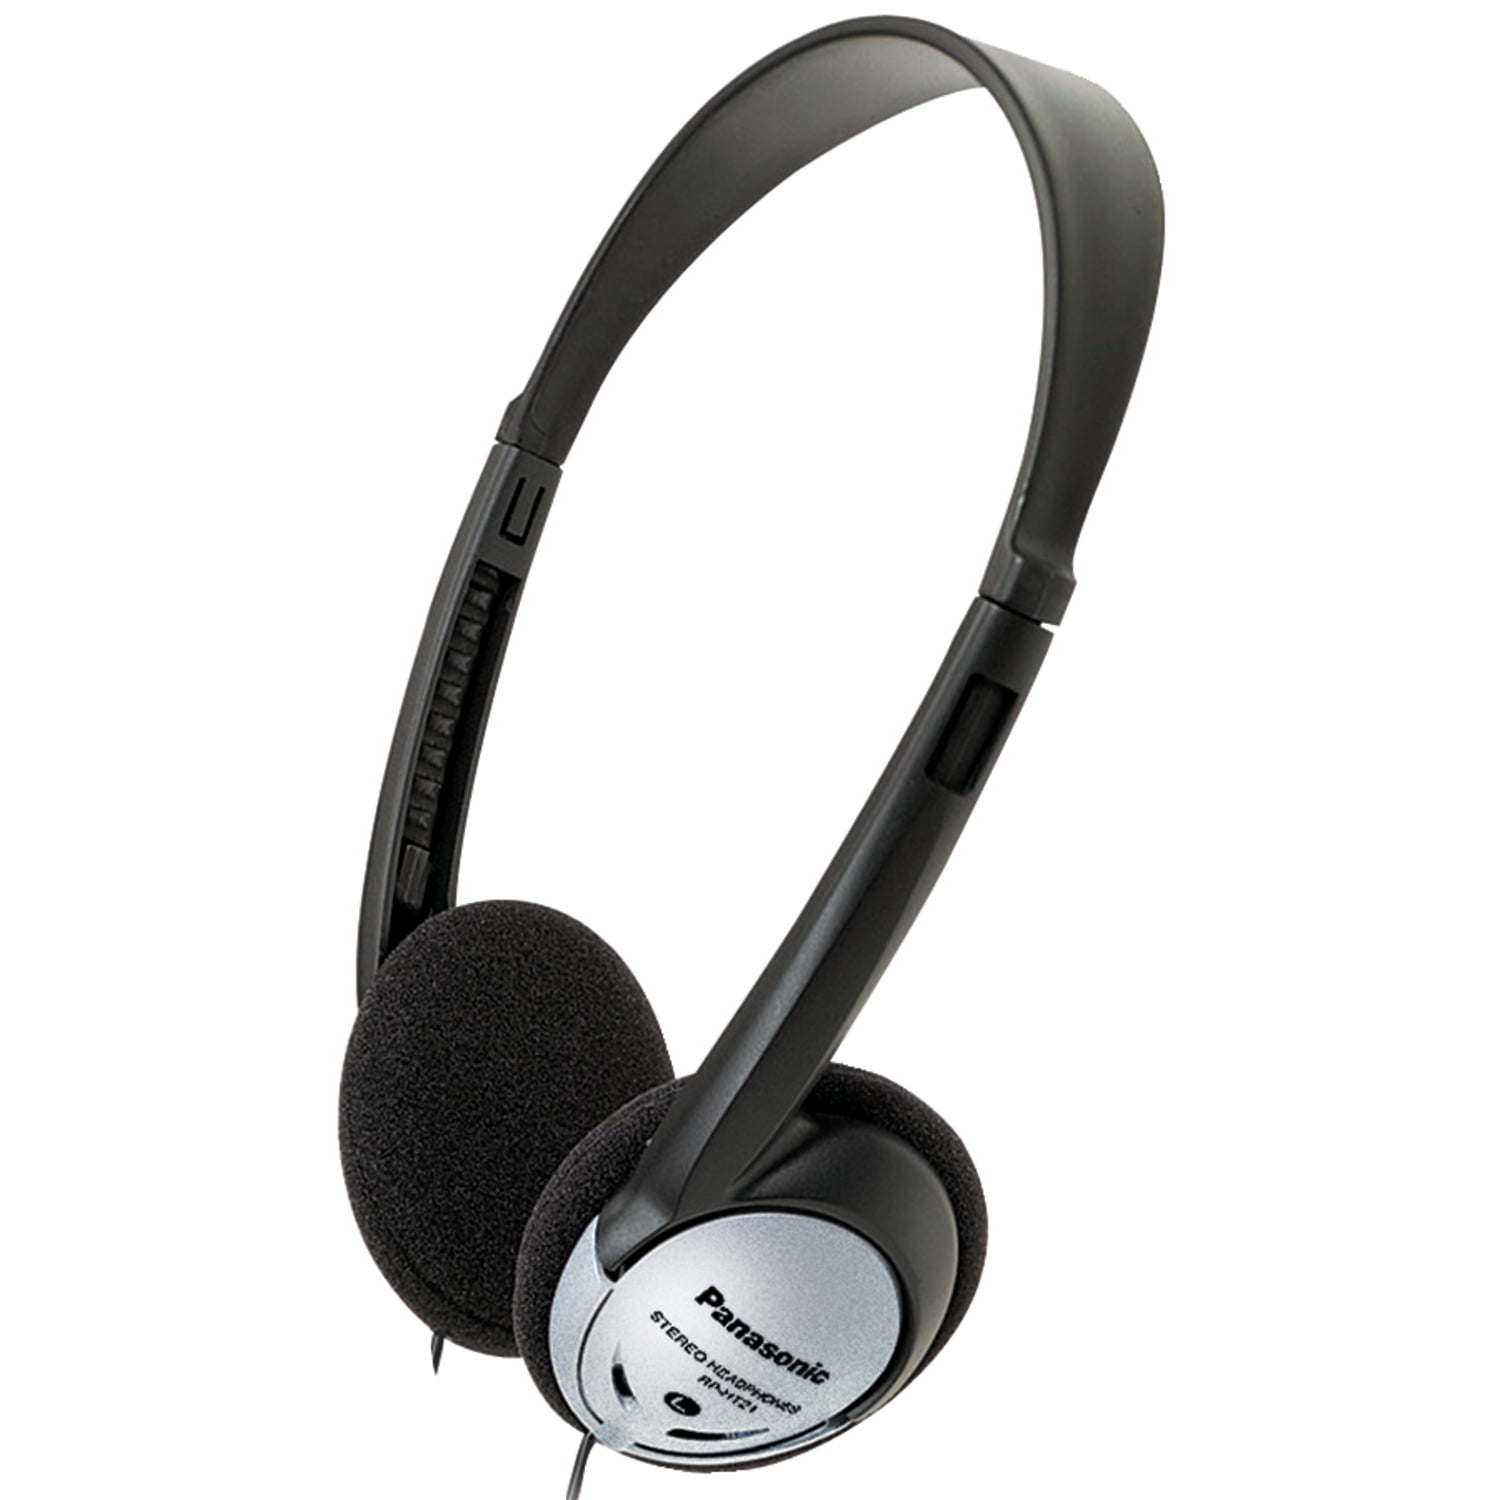 Panasonic Noise-Canceling Over-Ear Headphones, Black, RP-HT21